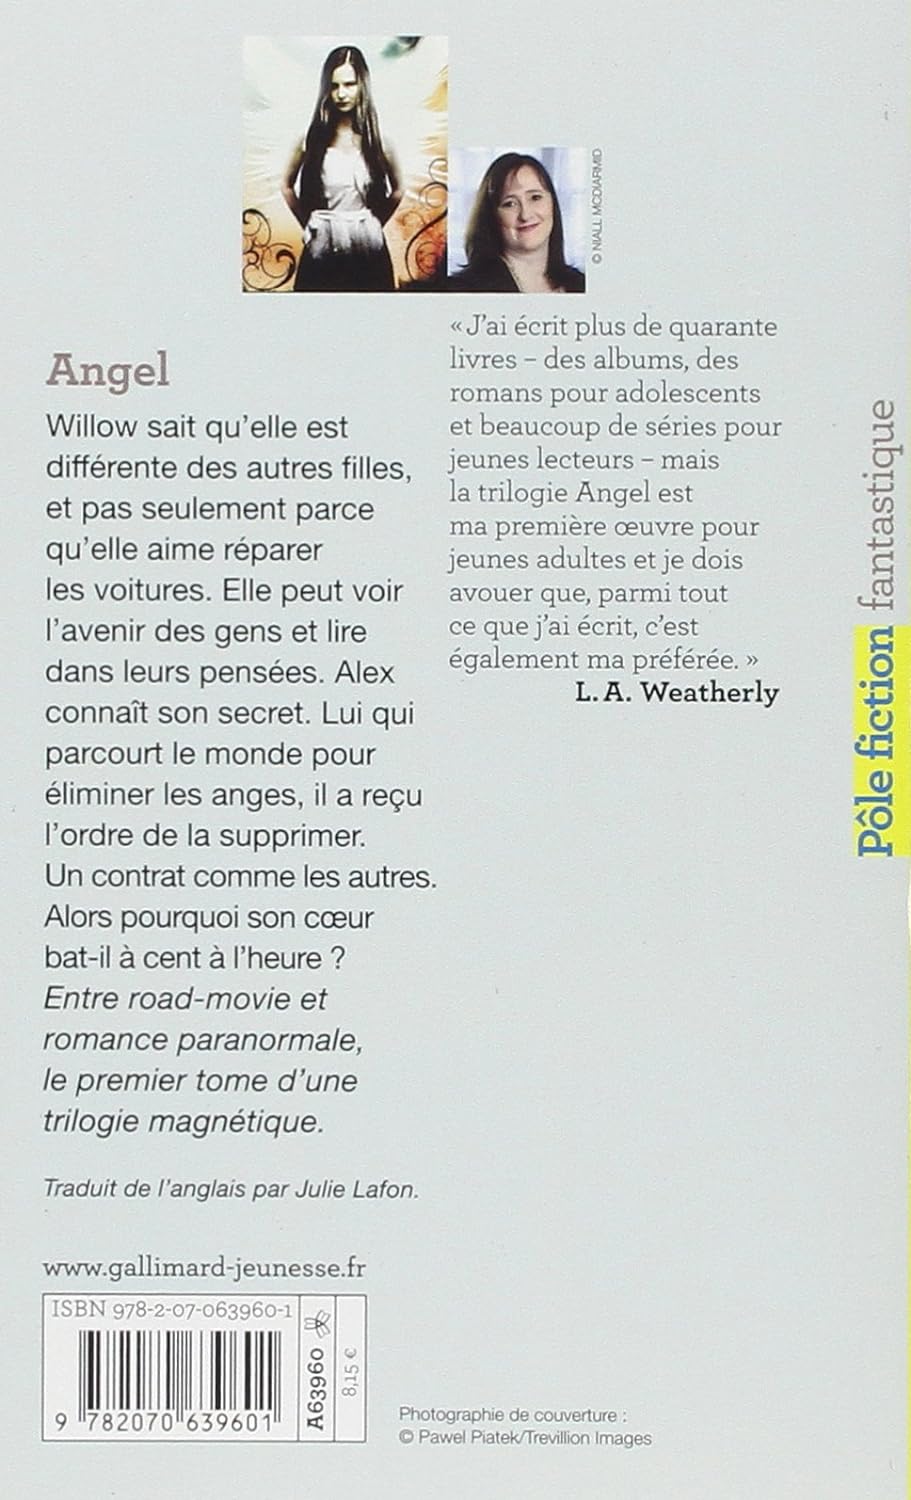 Pôle Fiction # 1 : Angel (FR) (L.A. Weatherly)